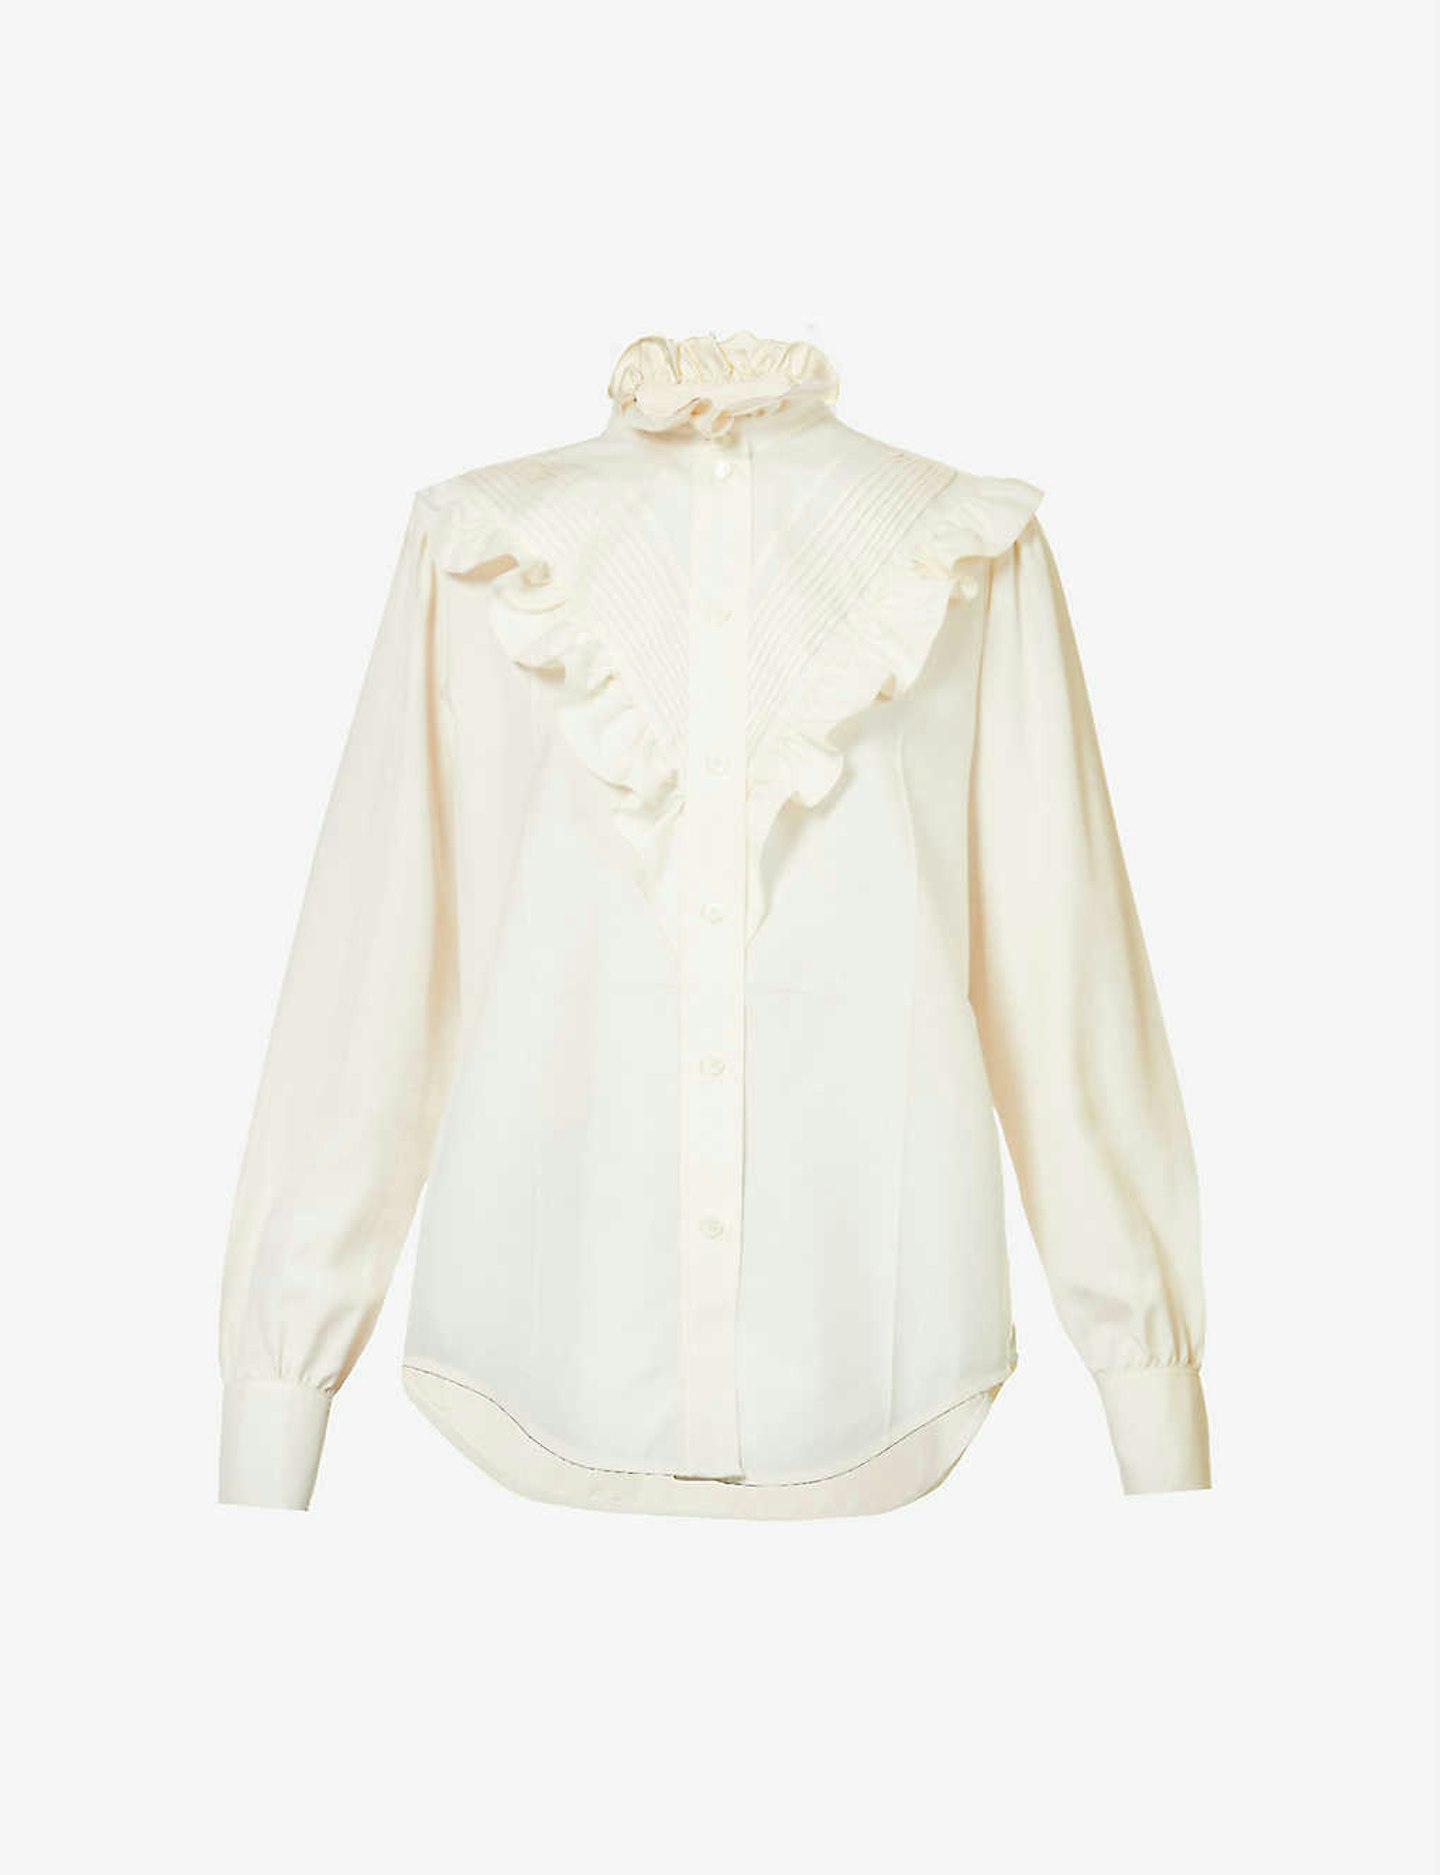 Victoria Beckham, Ruffle Trim Silk Shirt, £650